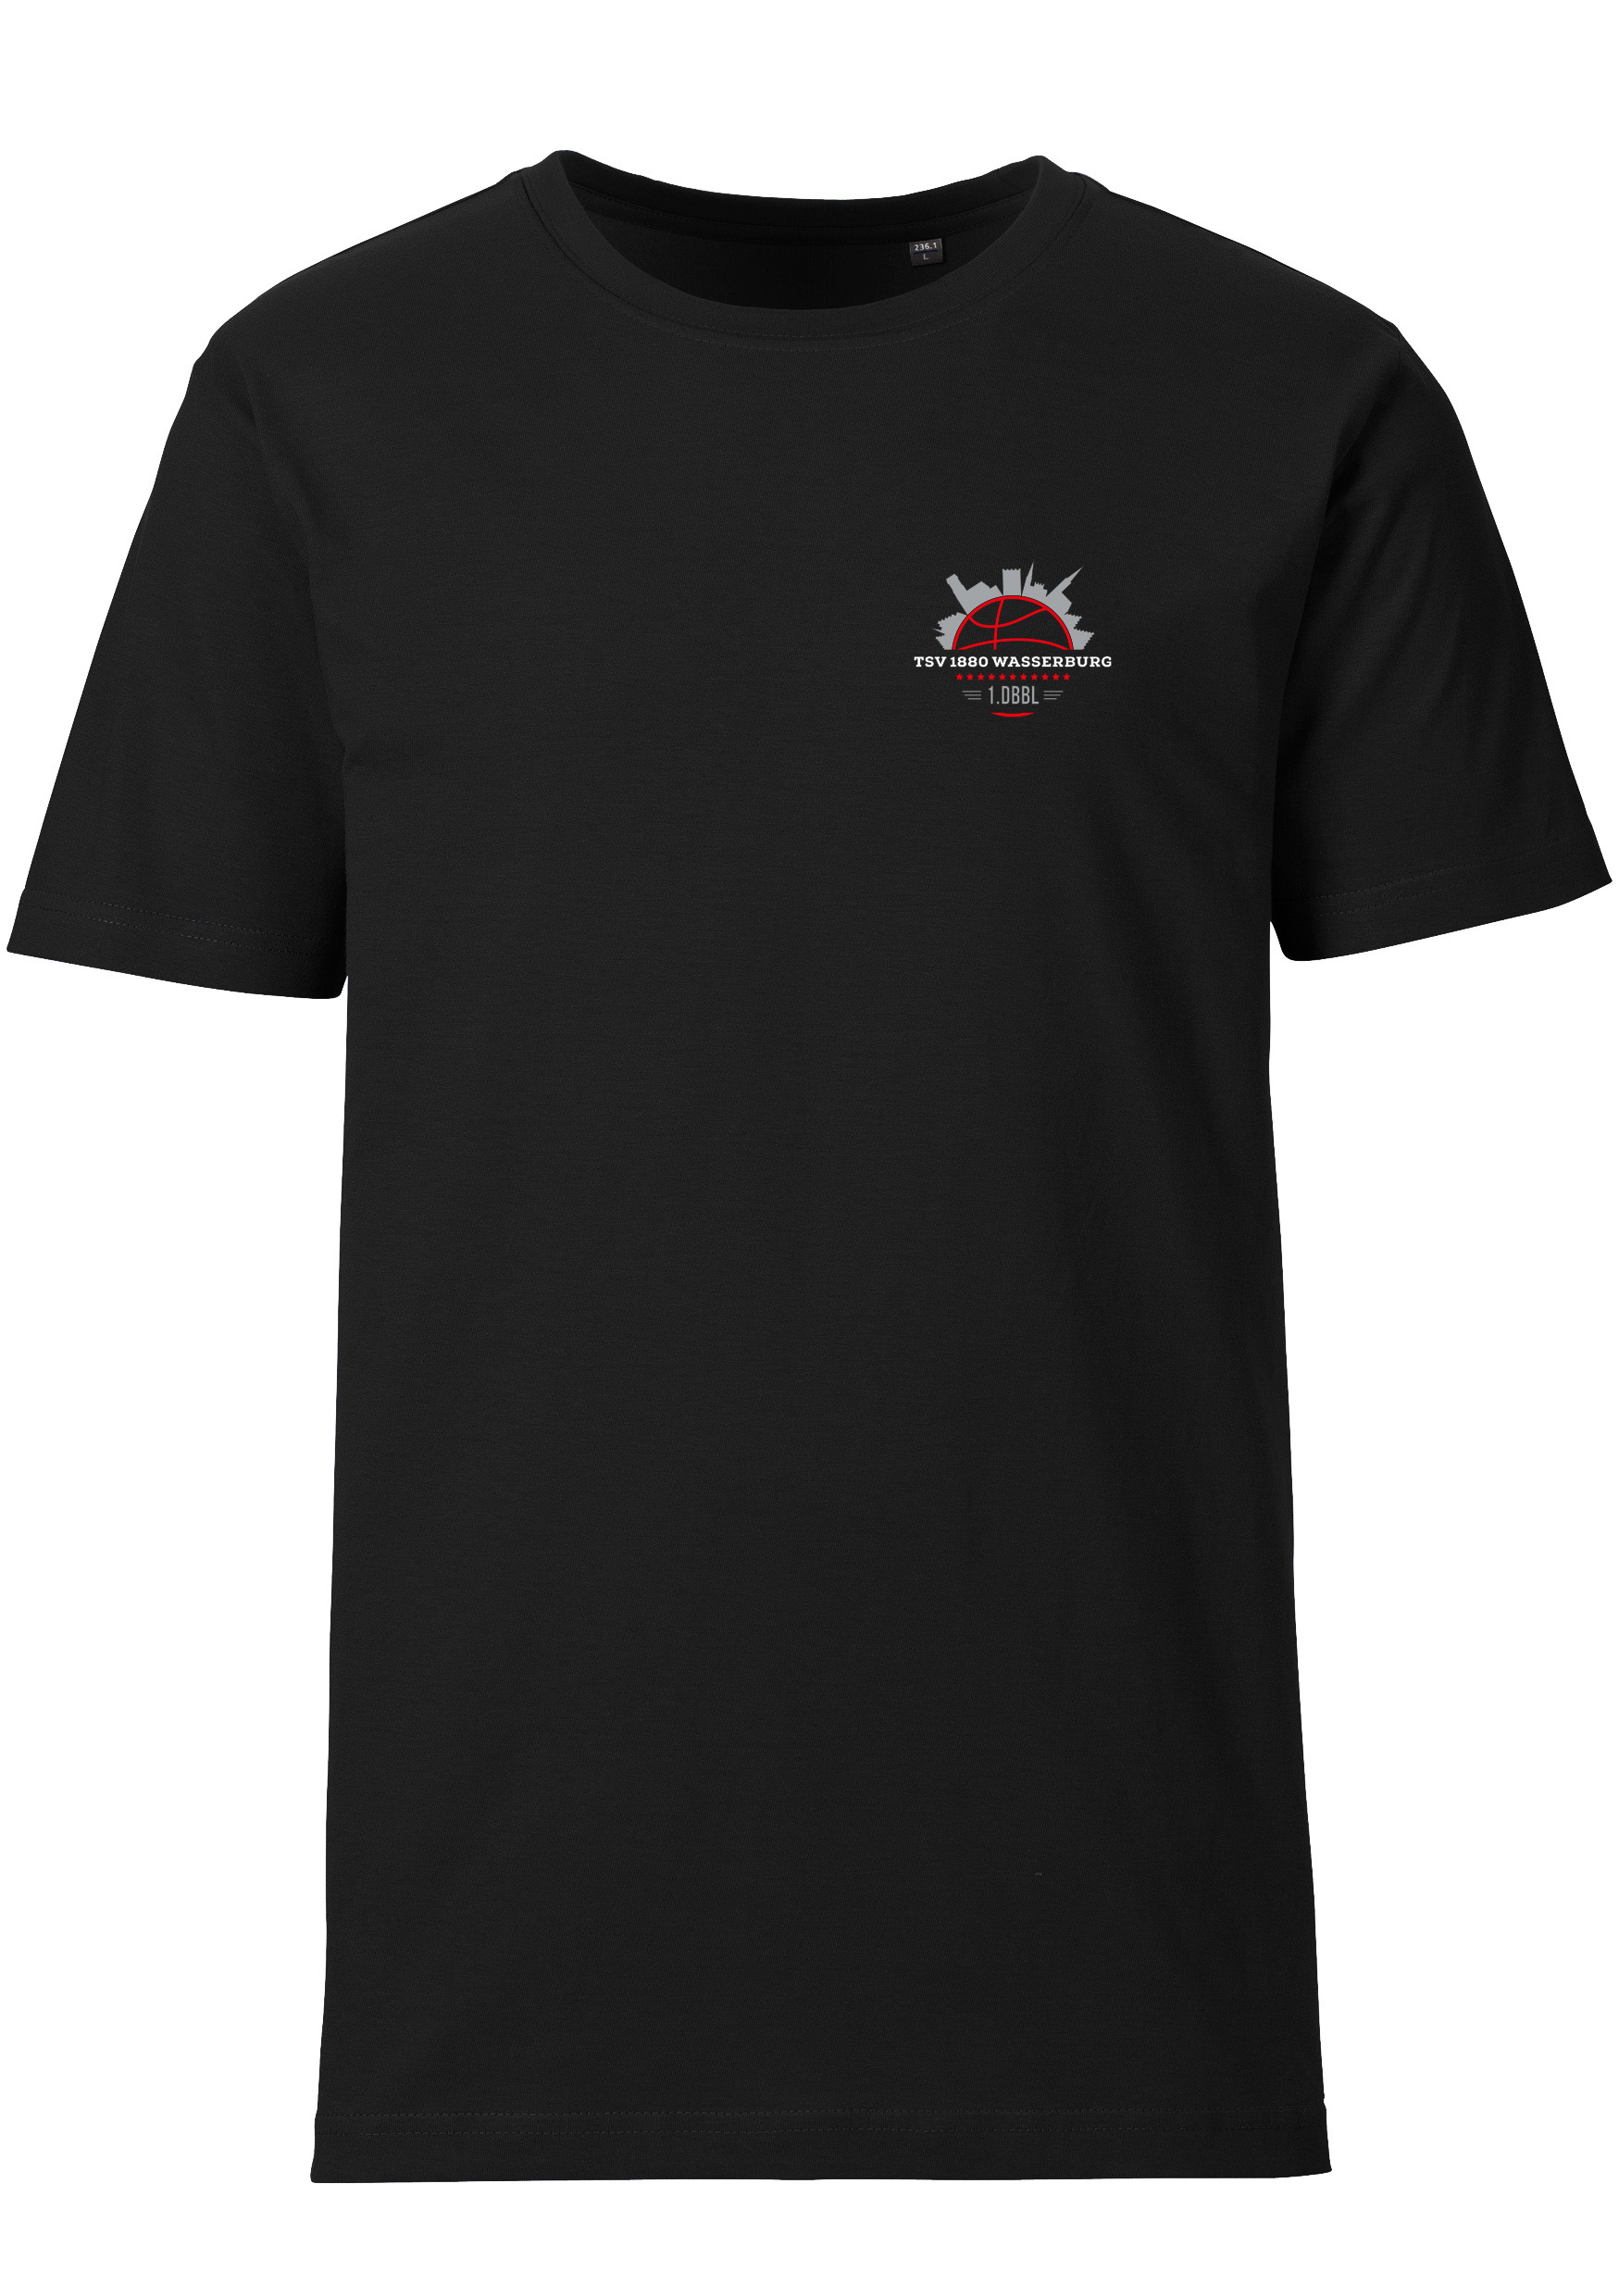 TSV 1880 Wasserburg T-Shirt Herren